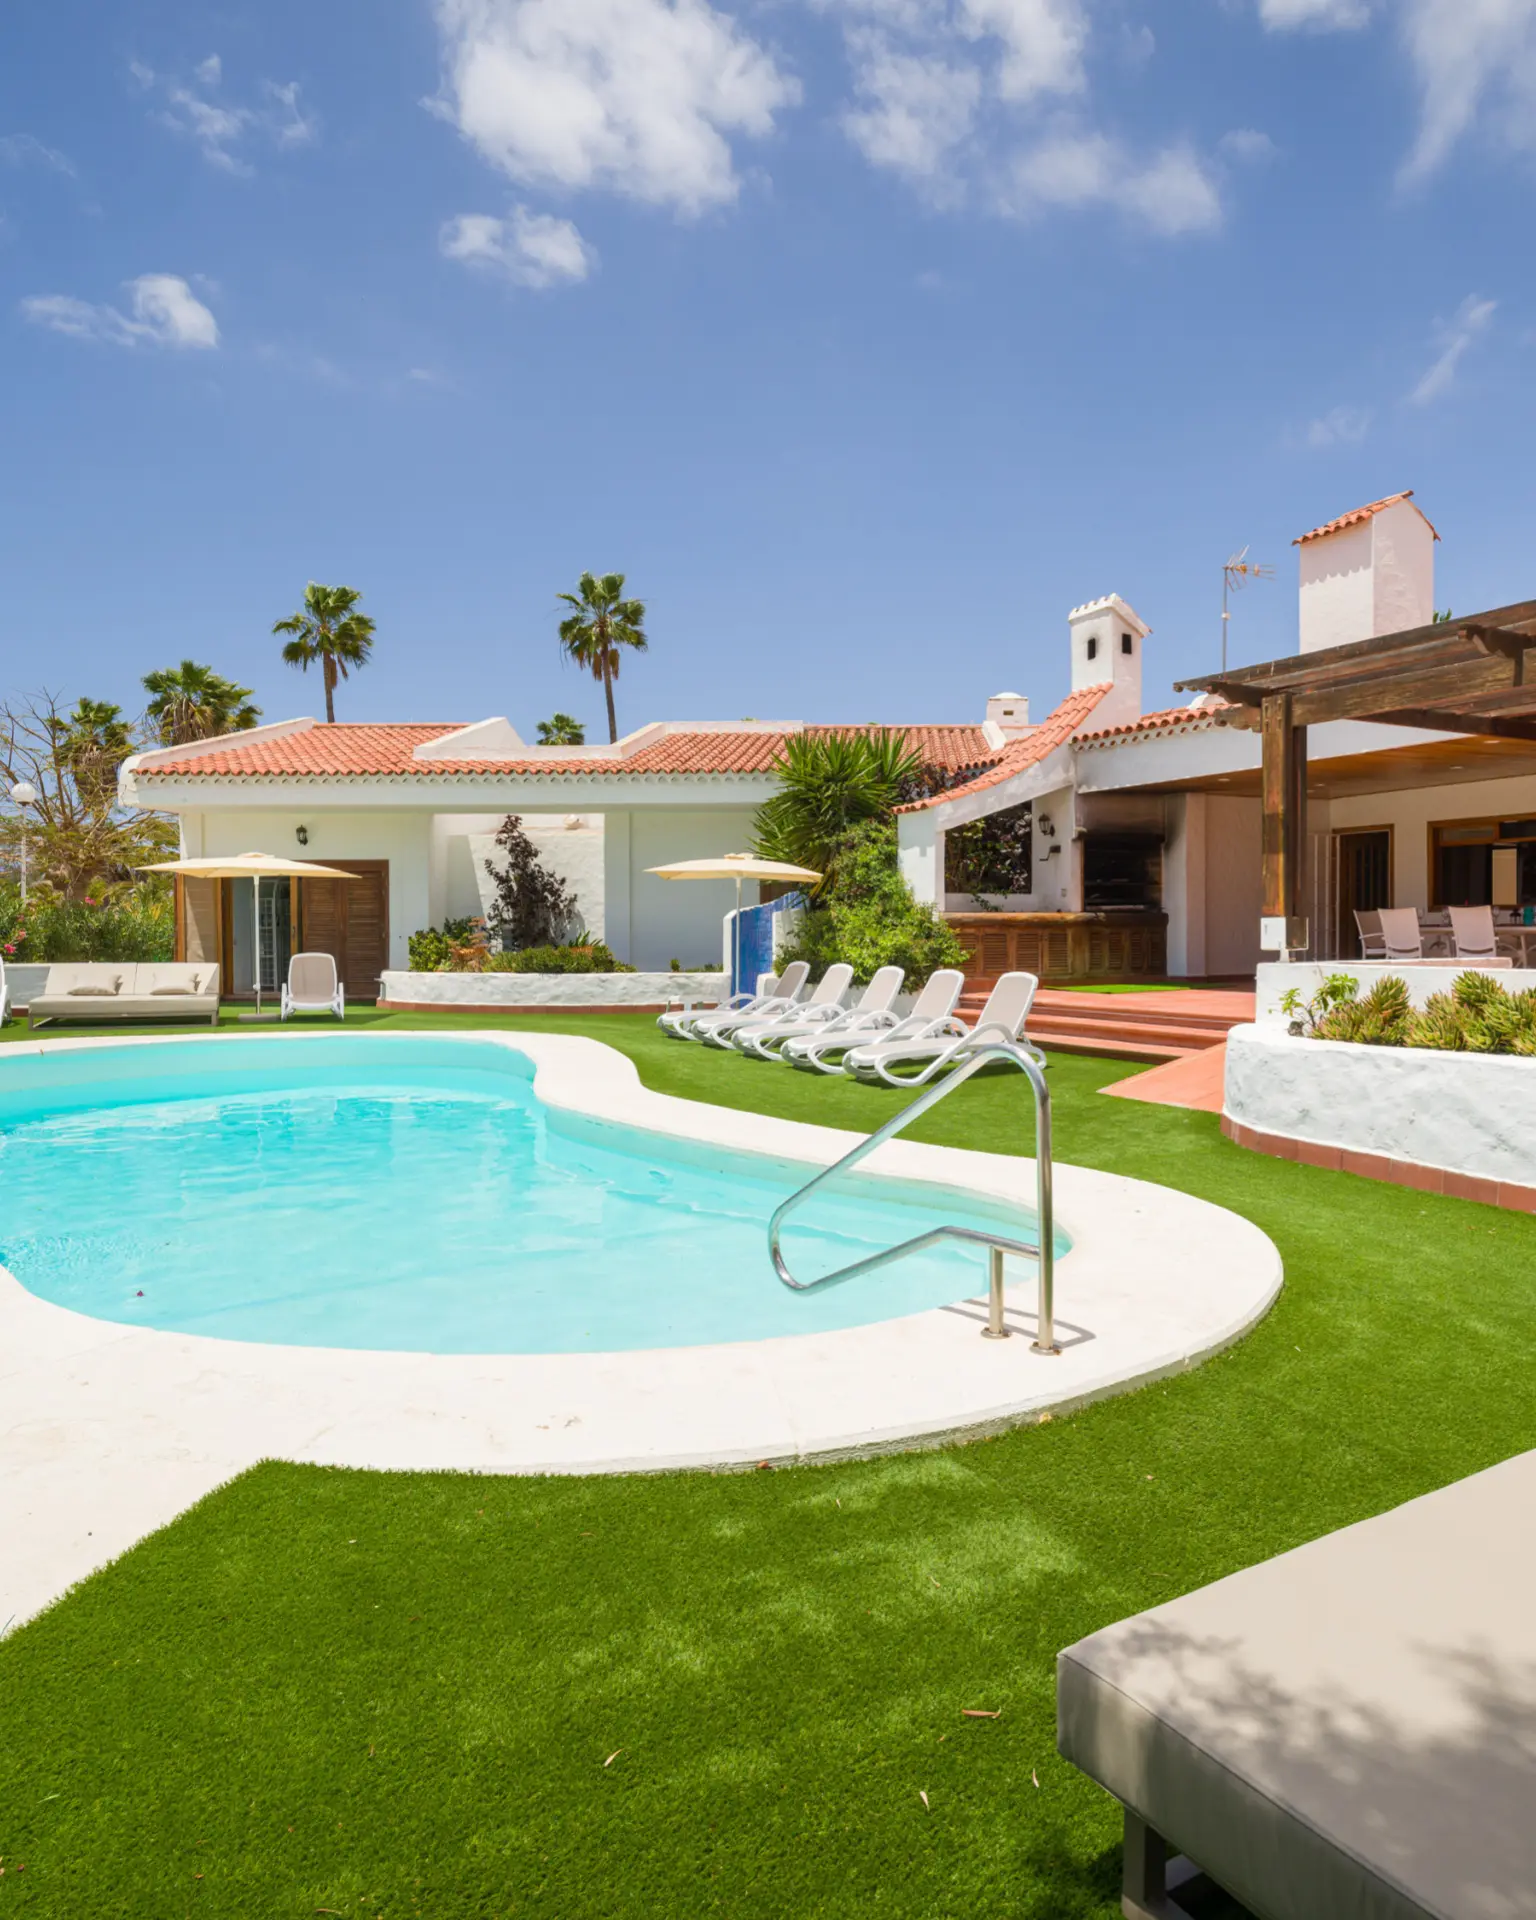 Family villa in Gran Canaria with pool